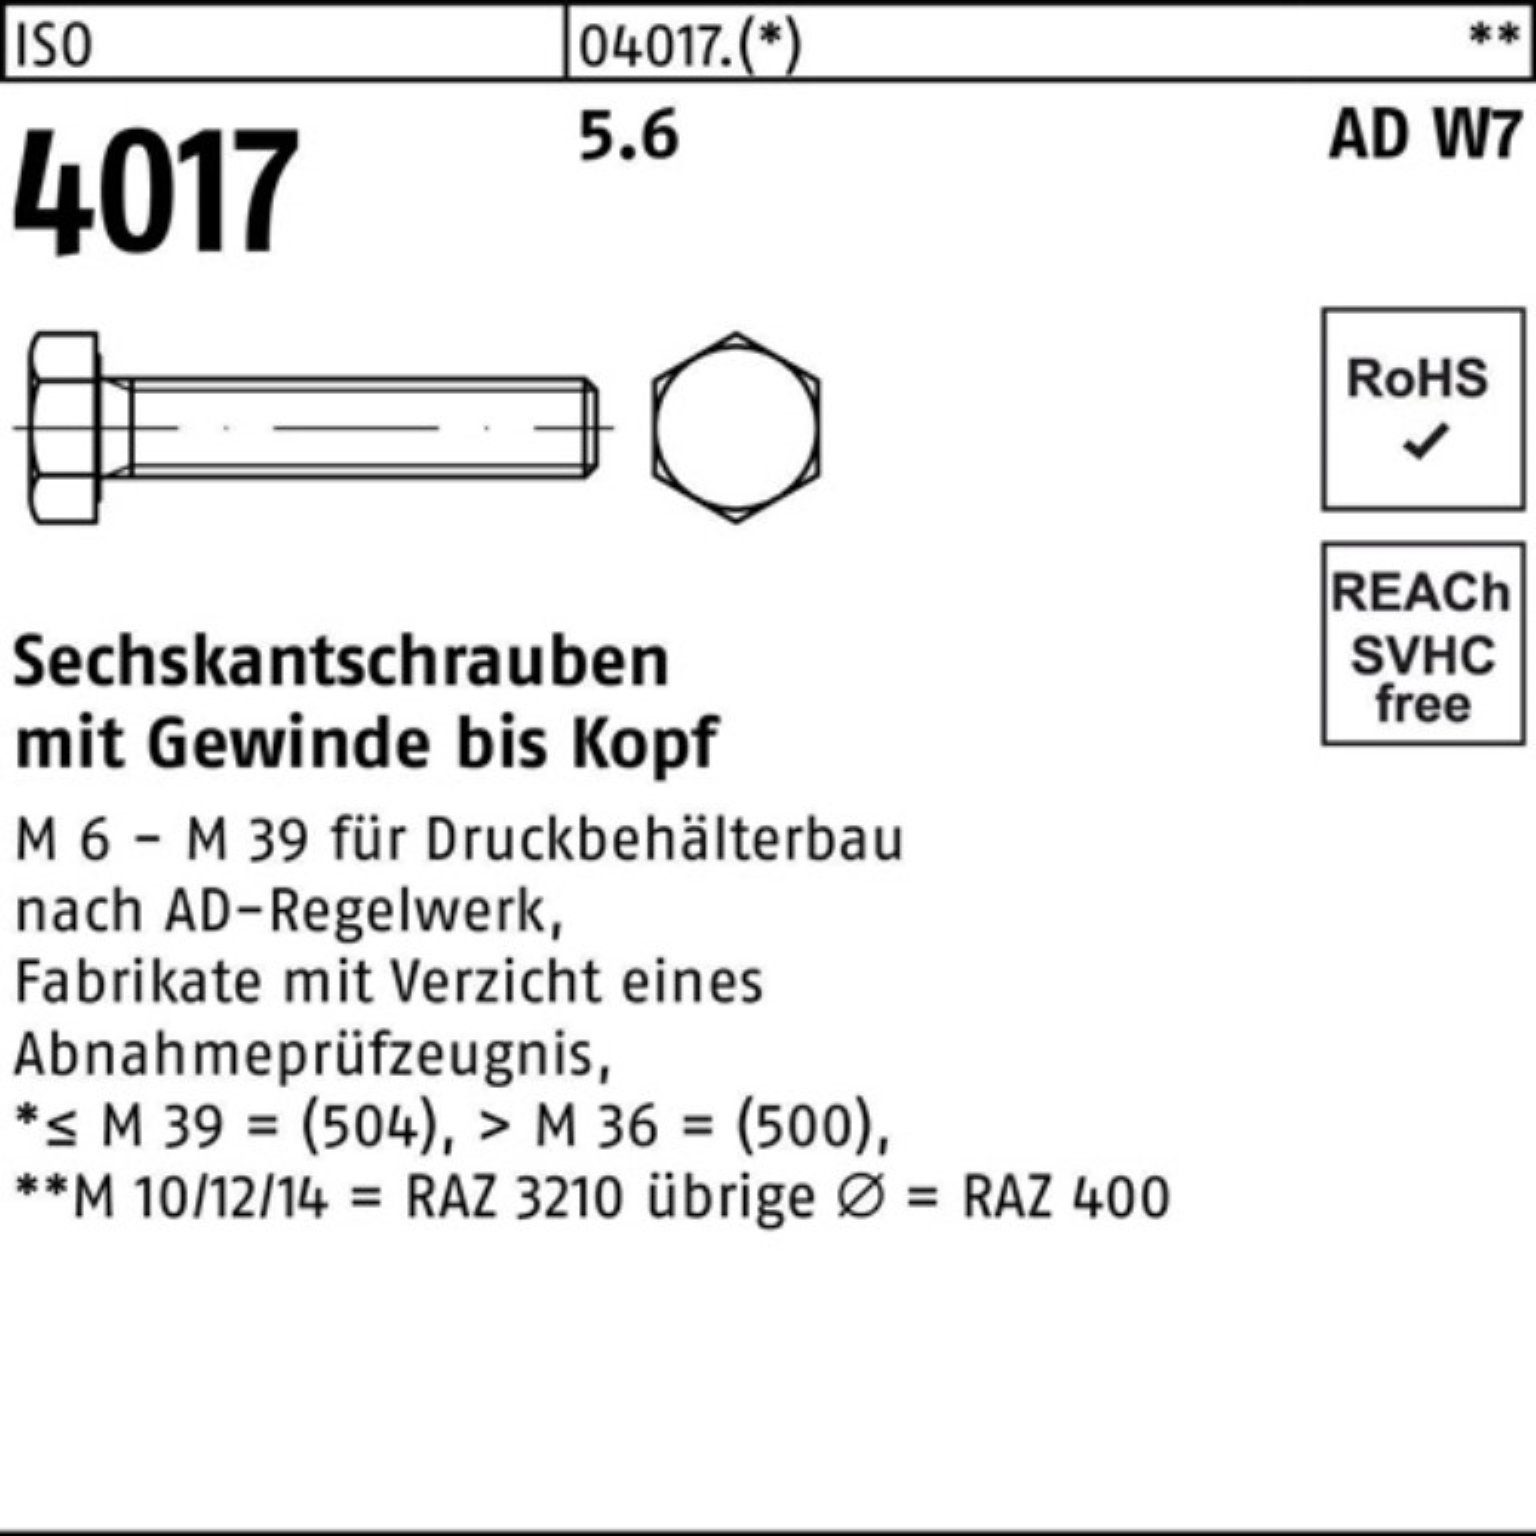 Bufab Sechskantschraube 100er Pack Sechskantschraube ISO 4017 VG M10x 45 5.6 AD W7 100 Stück